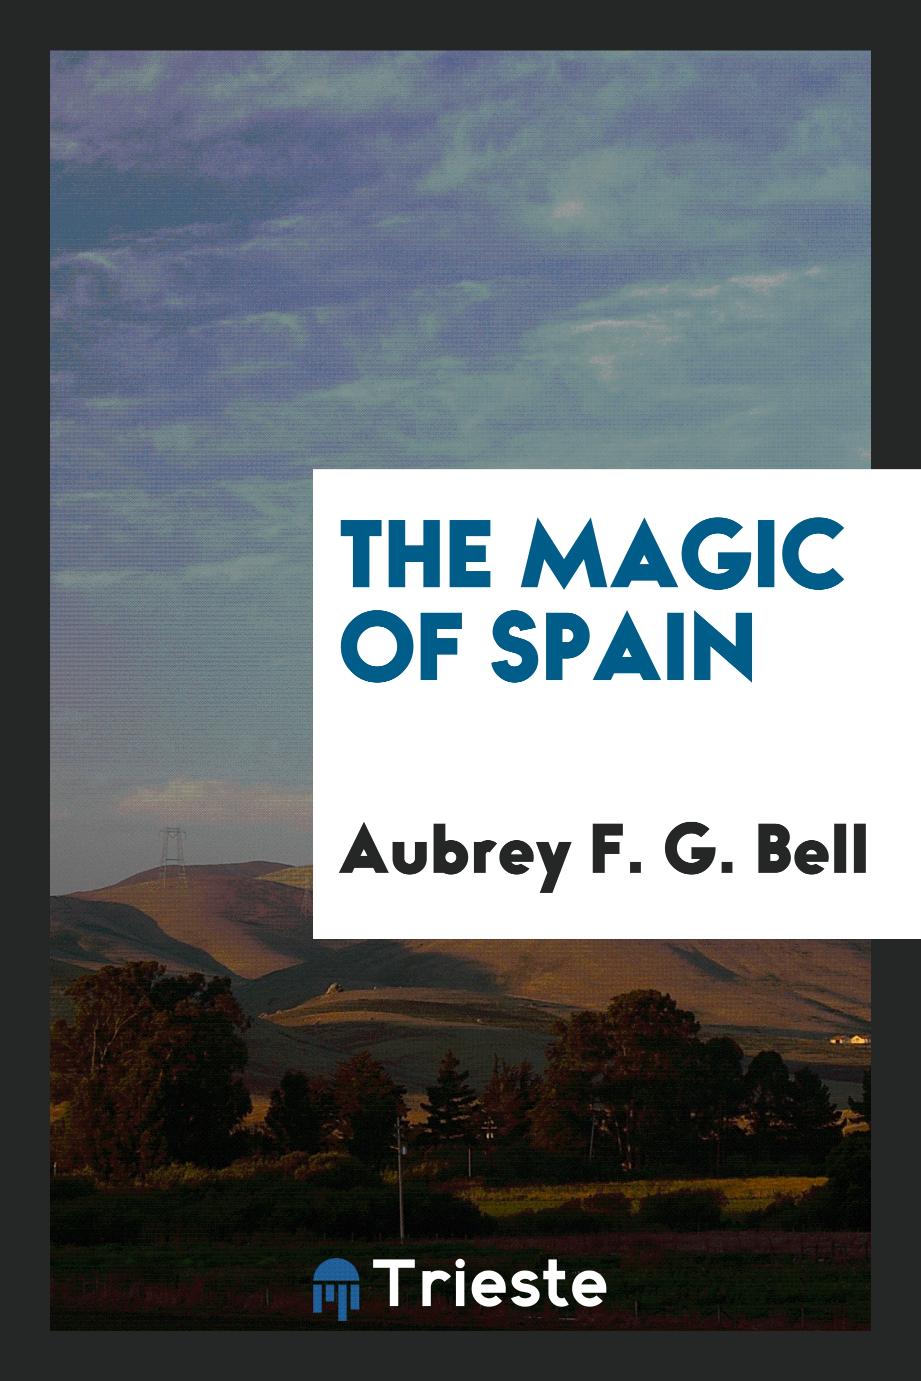 The magic of Spain